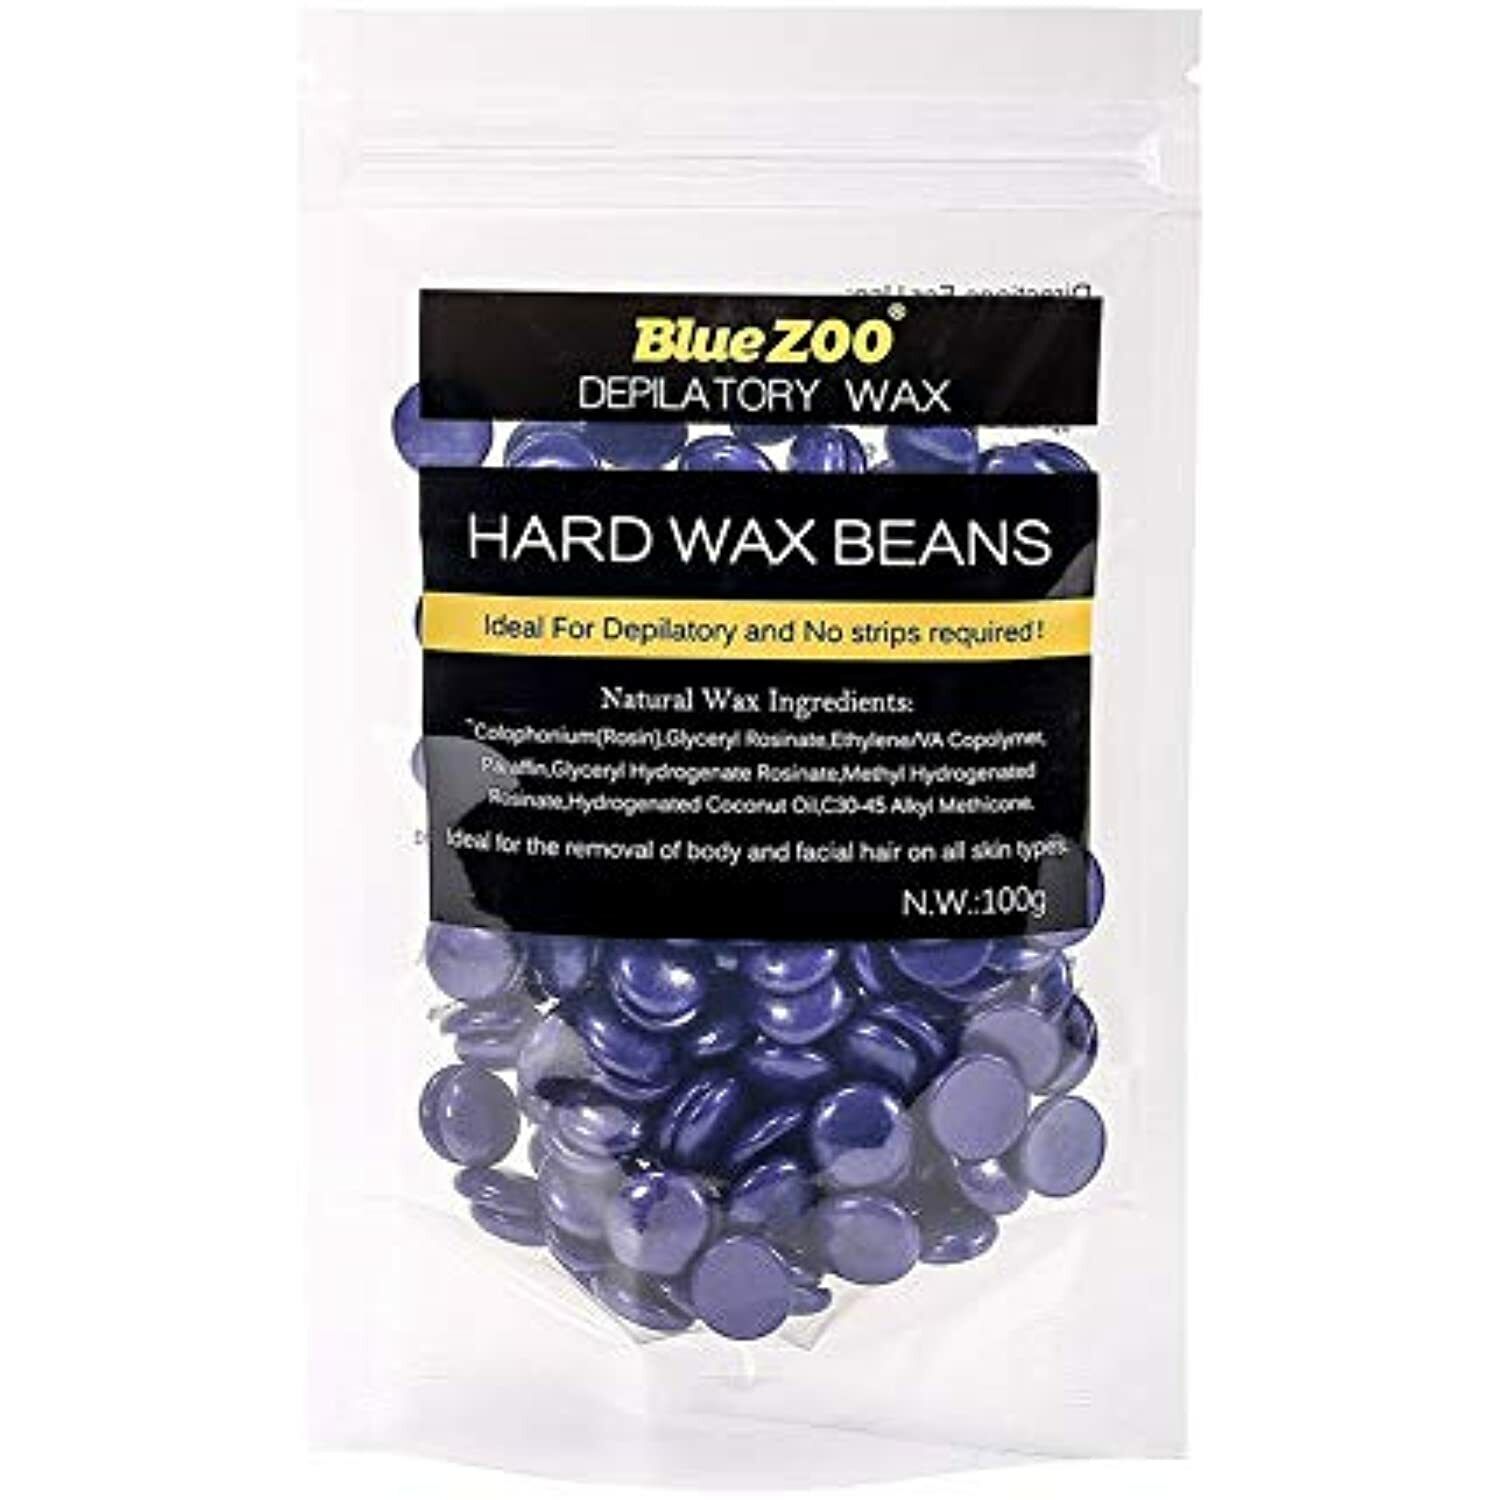 Peyan Hard Wax Beans Wax Beads - Painless Coarse Hair Removal - For Bikini  6183785424729 | eBay